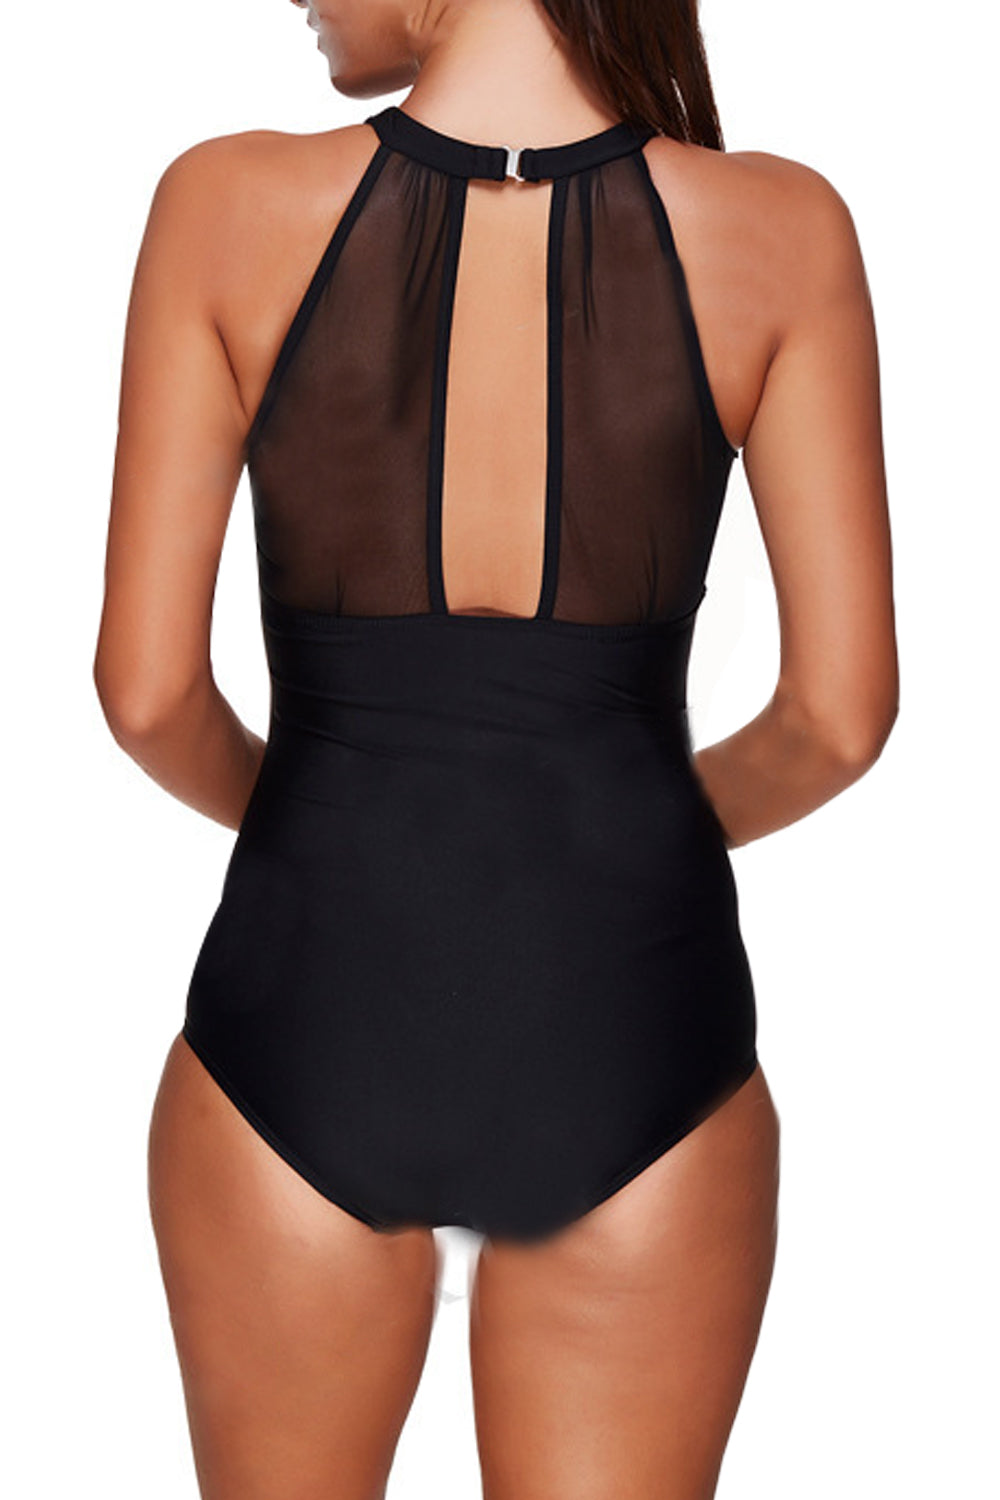 Iyasson Black See Through High-neck One-piece Swimsuit